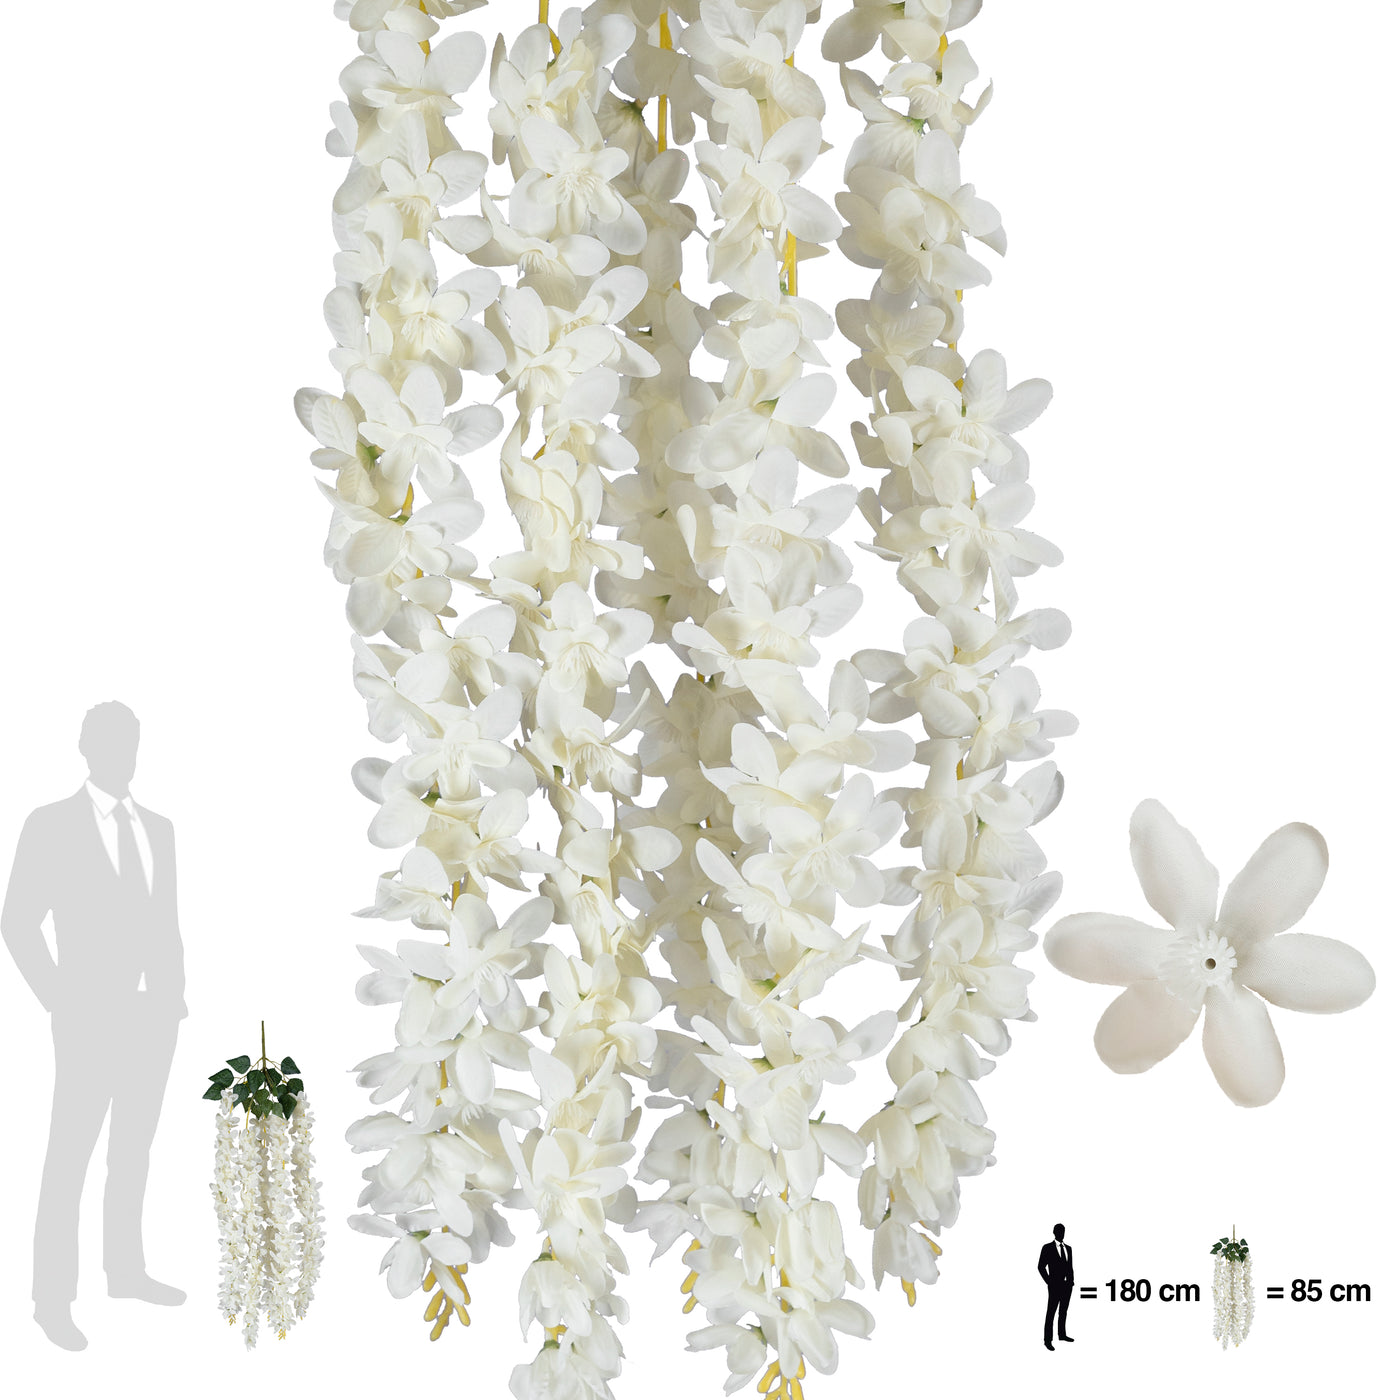 Ghirlanda artificiala de orhidee alba H85 cm